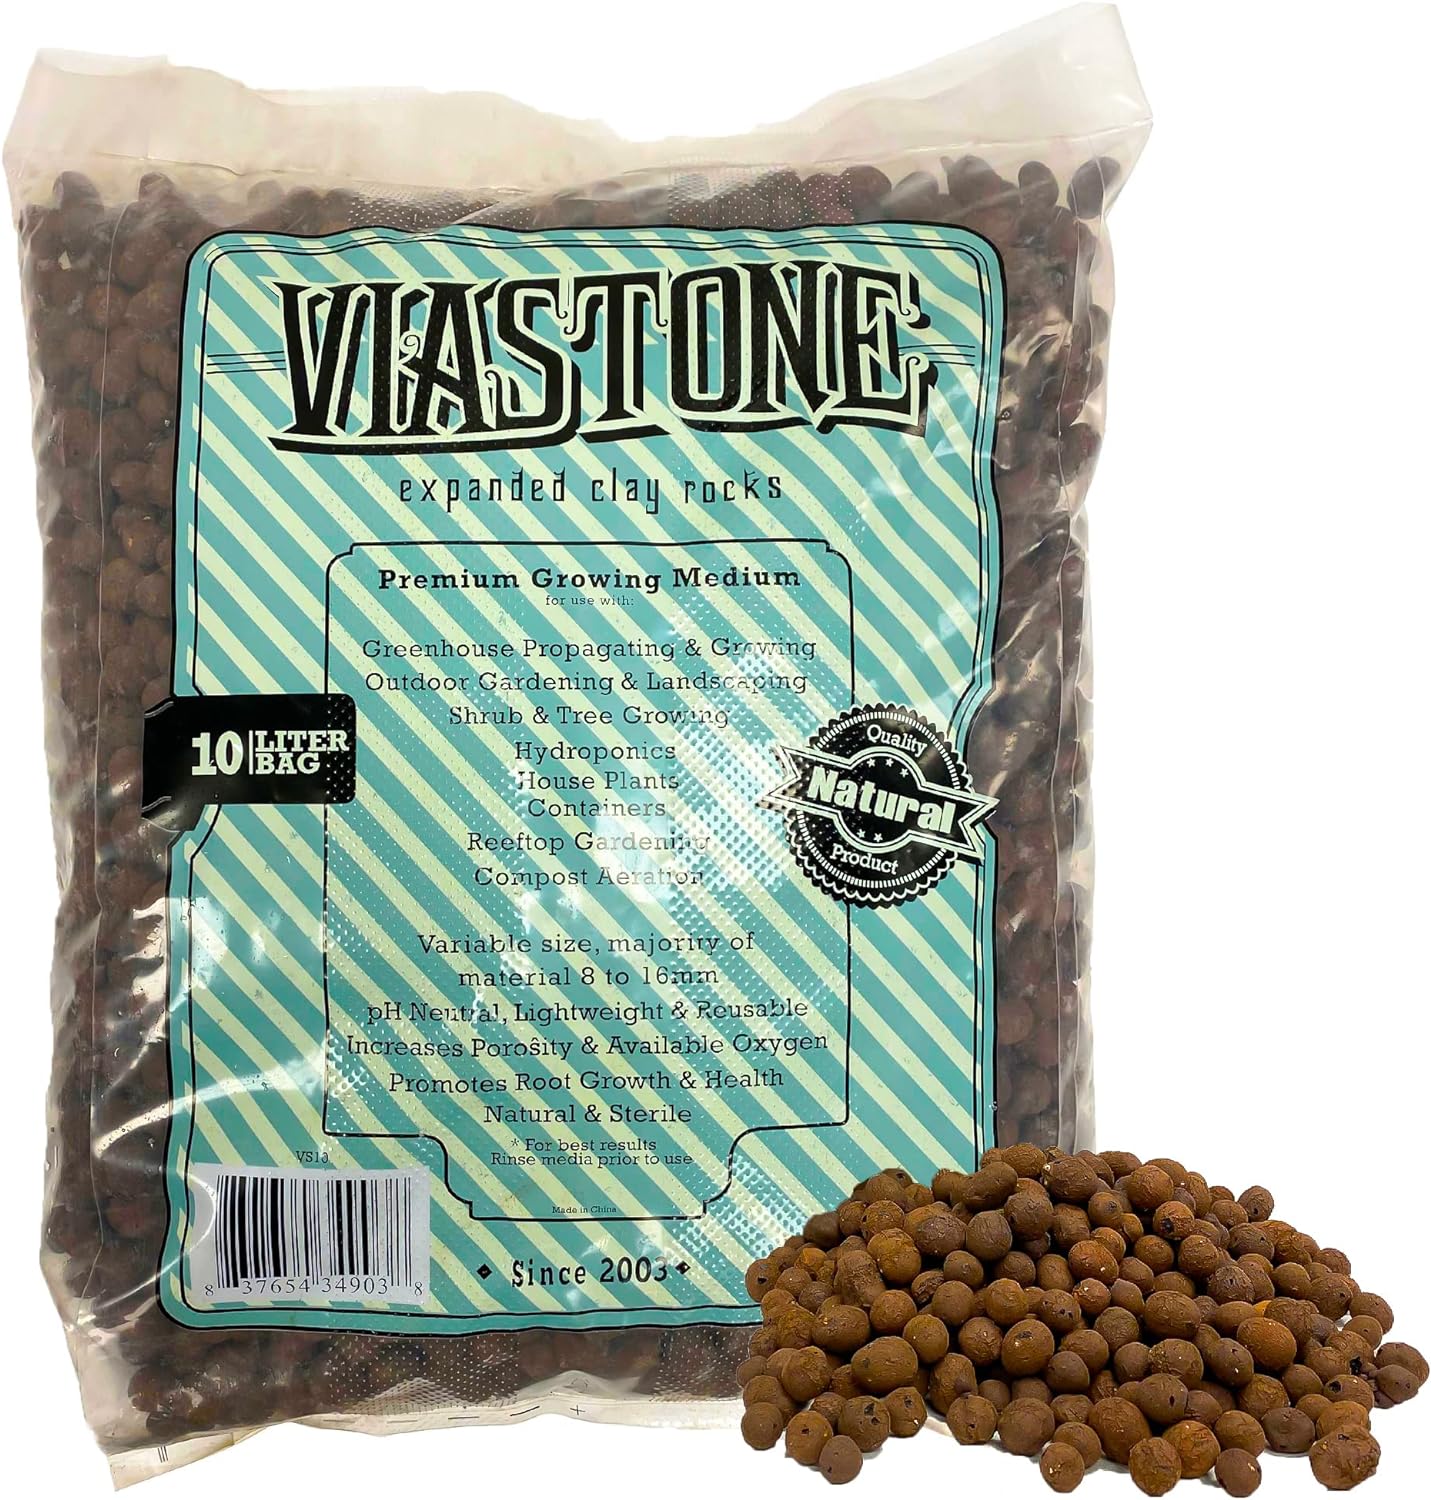 Viagrow VS10 Viastone Expanded Clay Pebbles Review